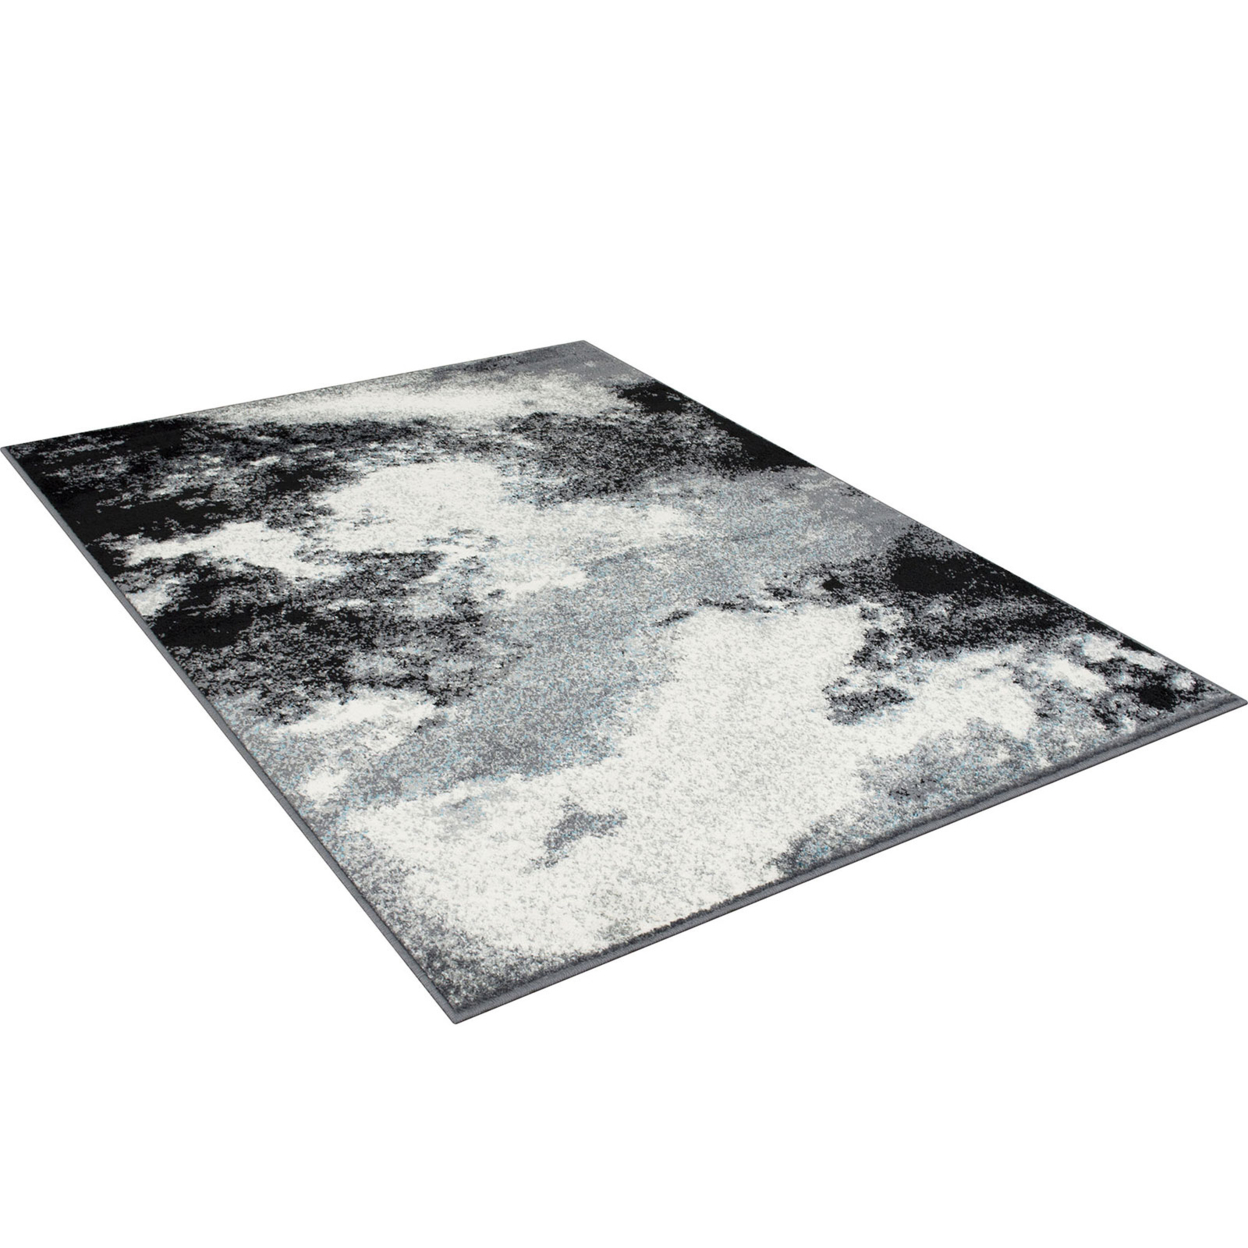 84 X 60 Inches Polyester Abstract Mosaic Print Rug, Black And Gray- Saltoro Sherpi